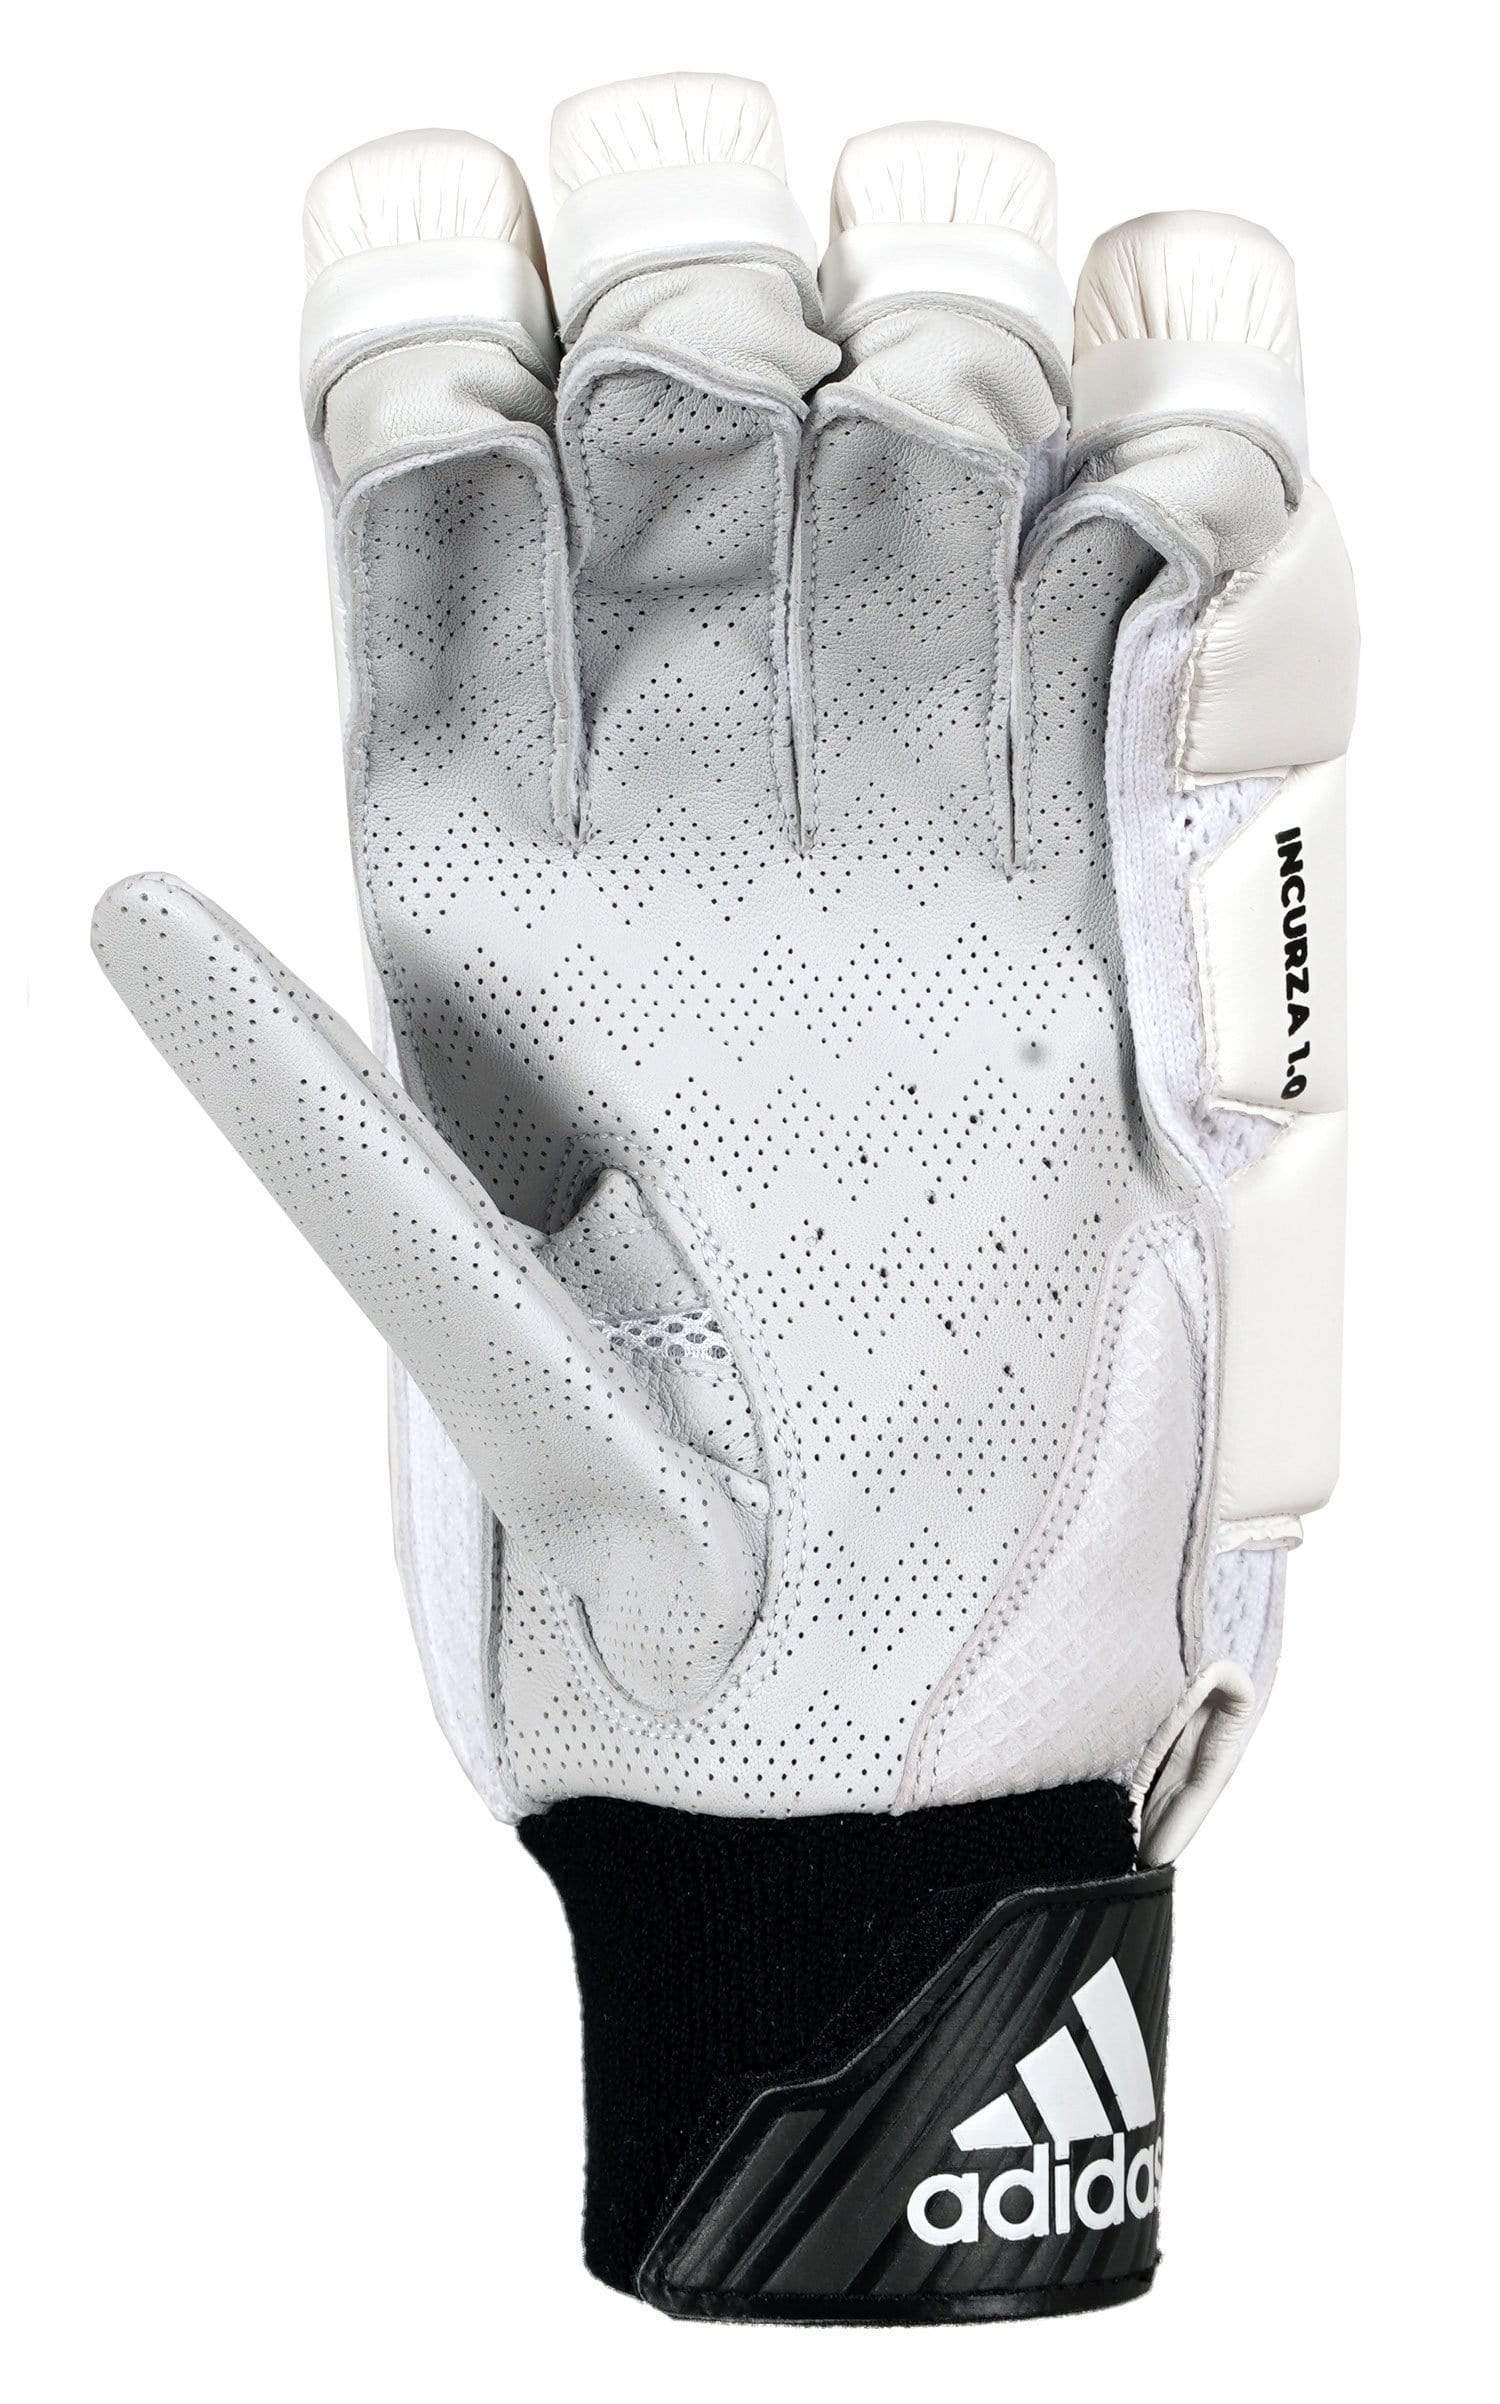 Adidas Gloves Adidas Incurza 1.0 Batting Gloves